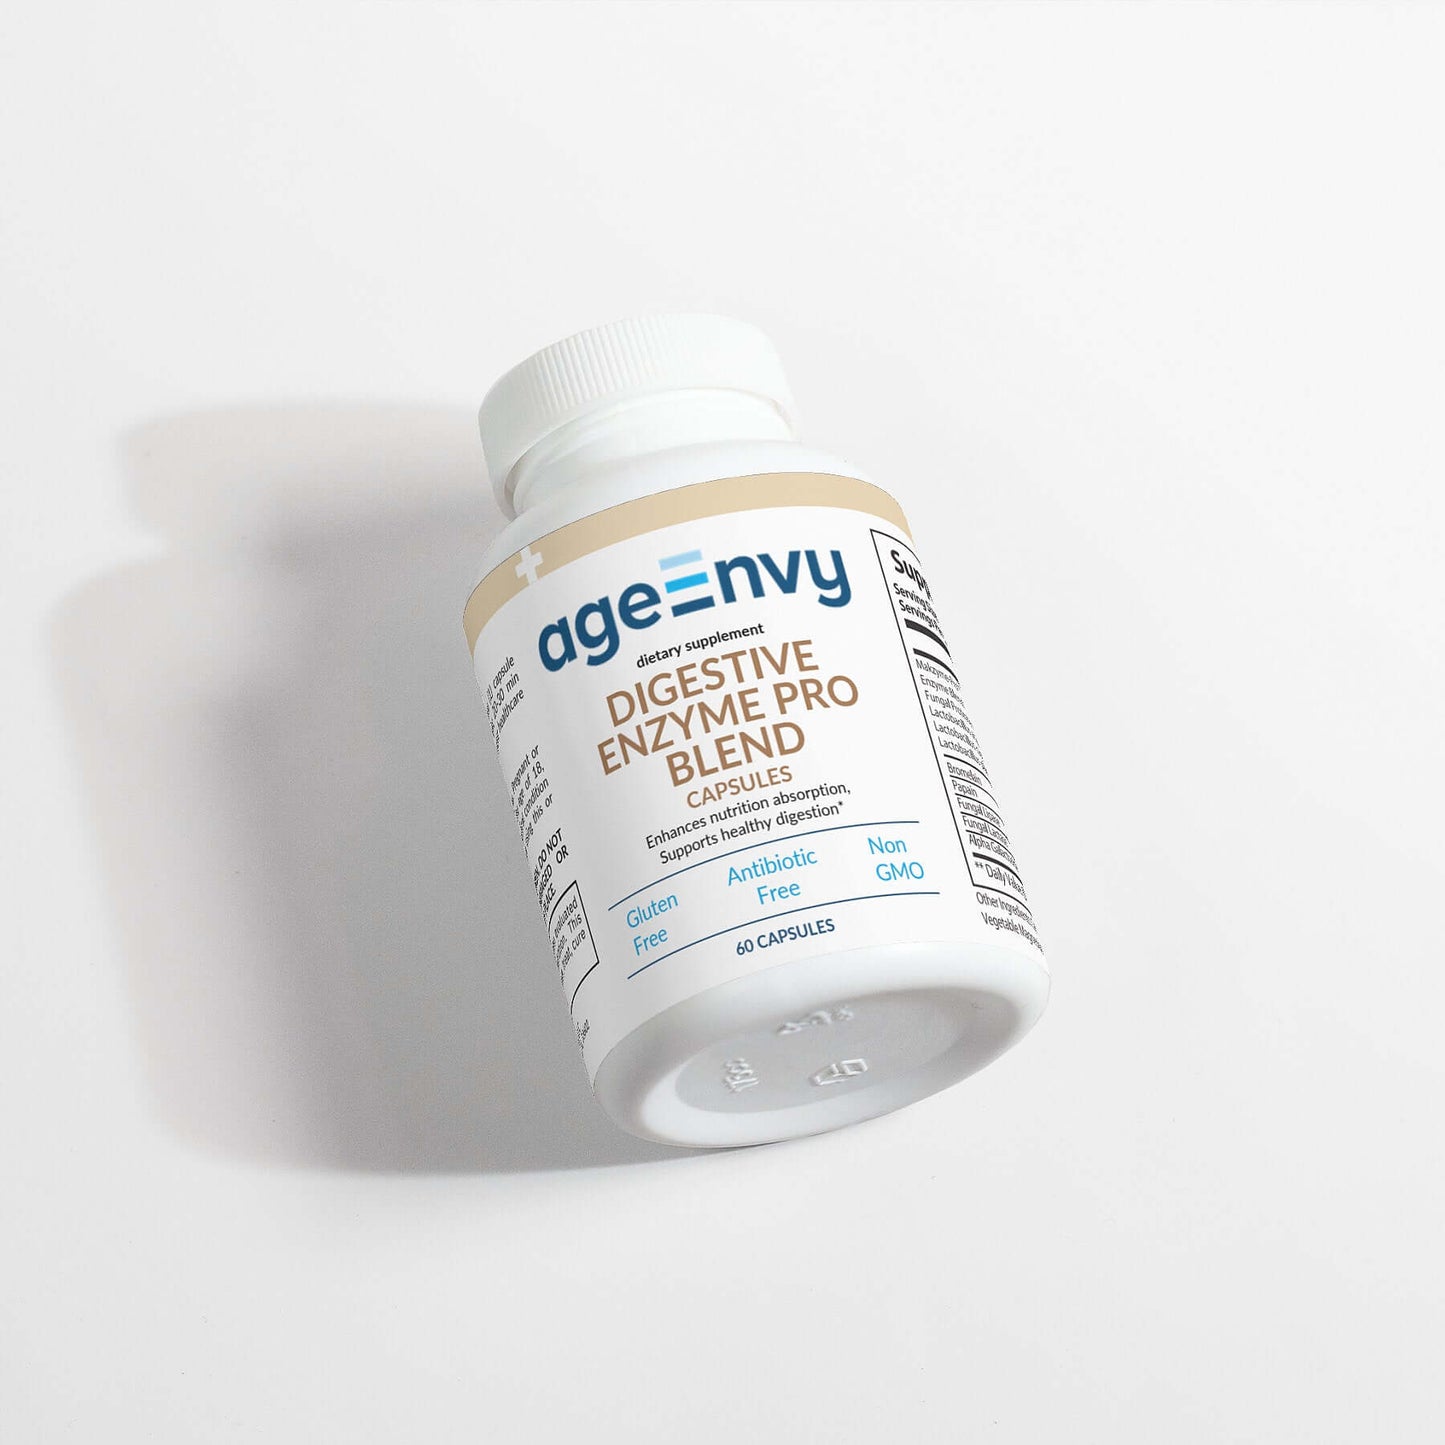 Digestive Enzyme Pro Blend - Gut Health Support